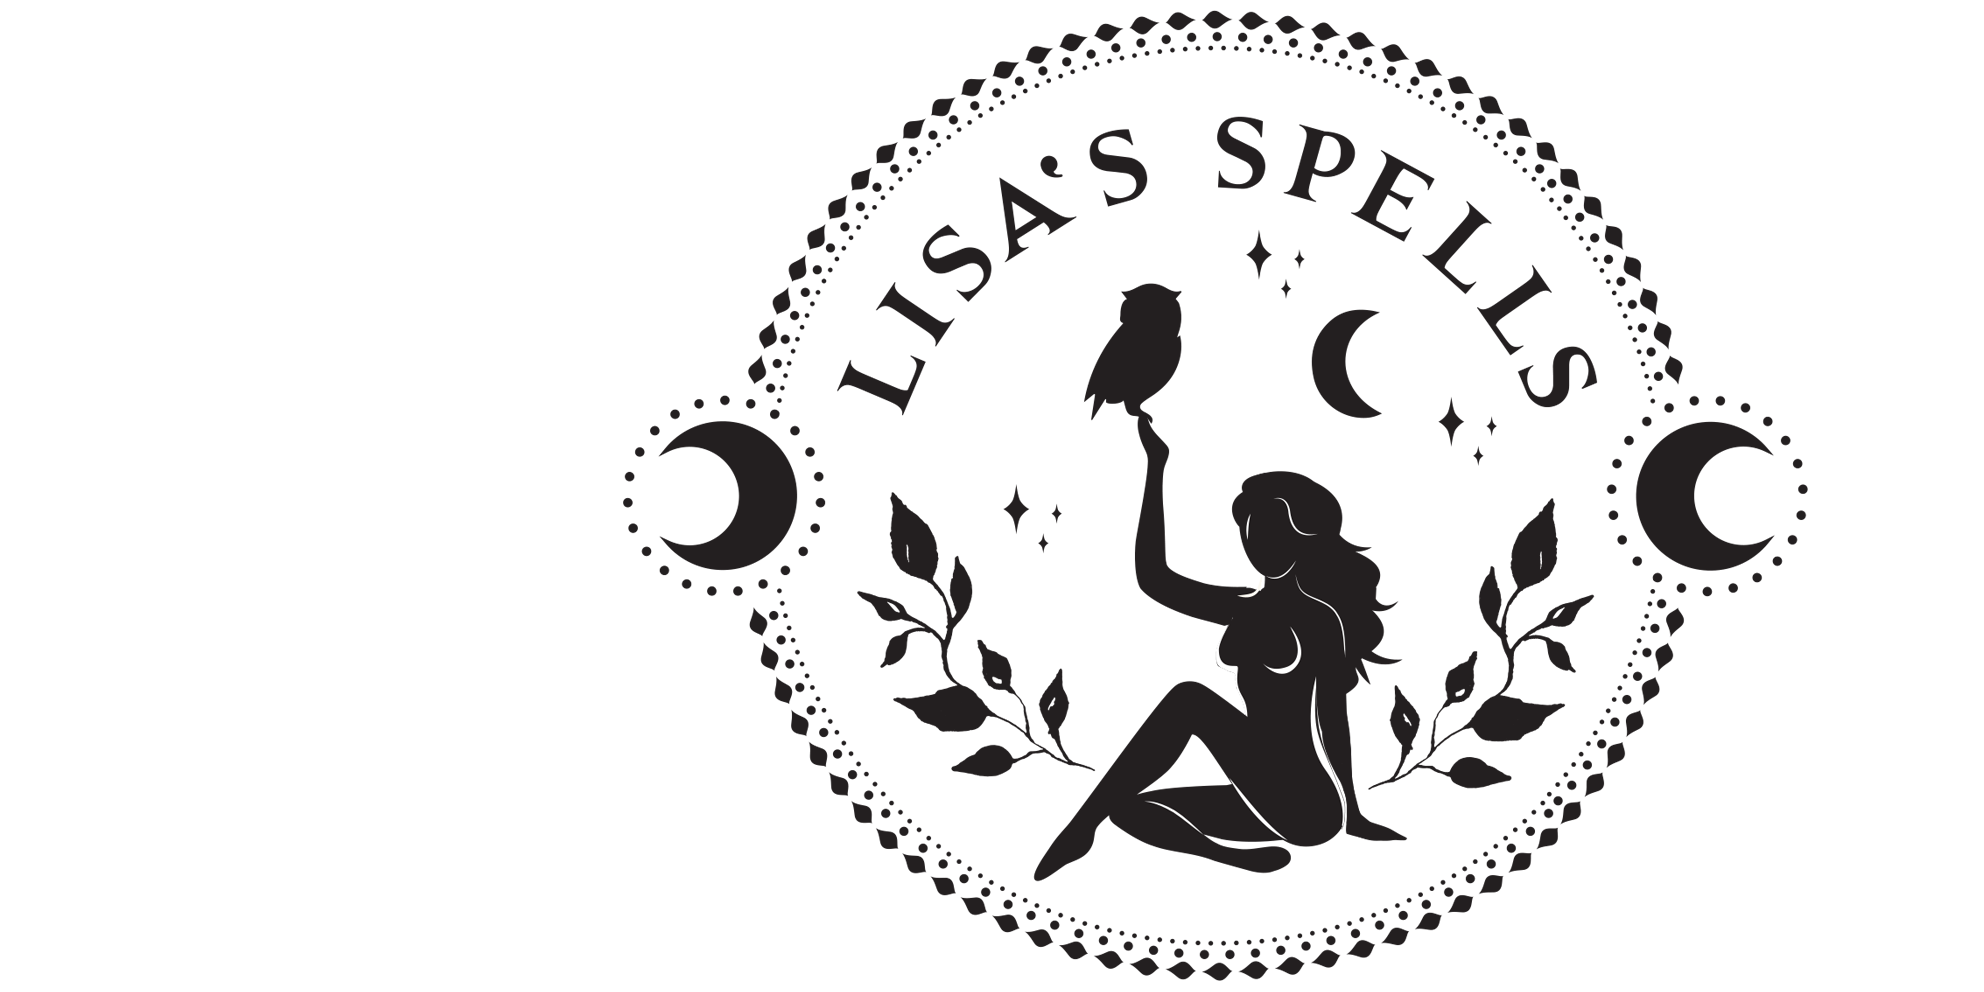 Lisa’s Spells